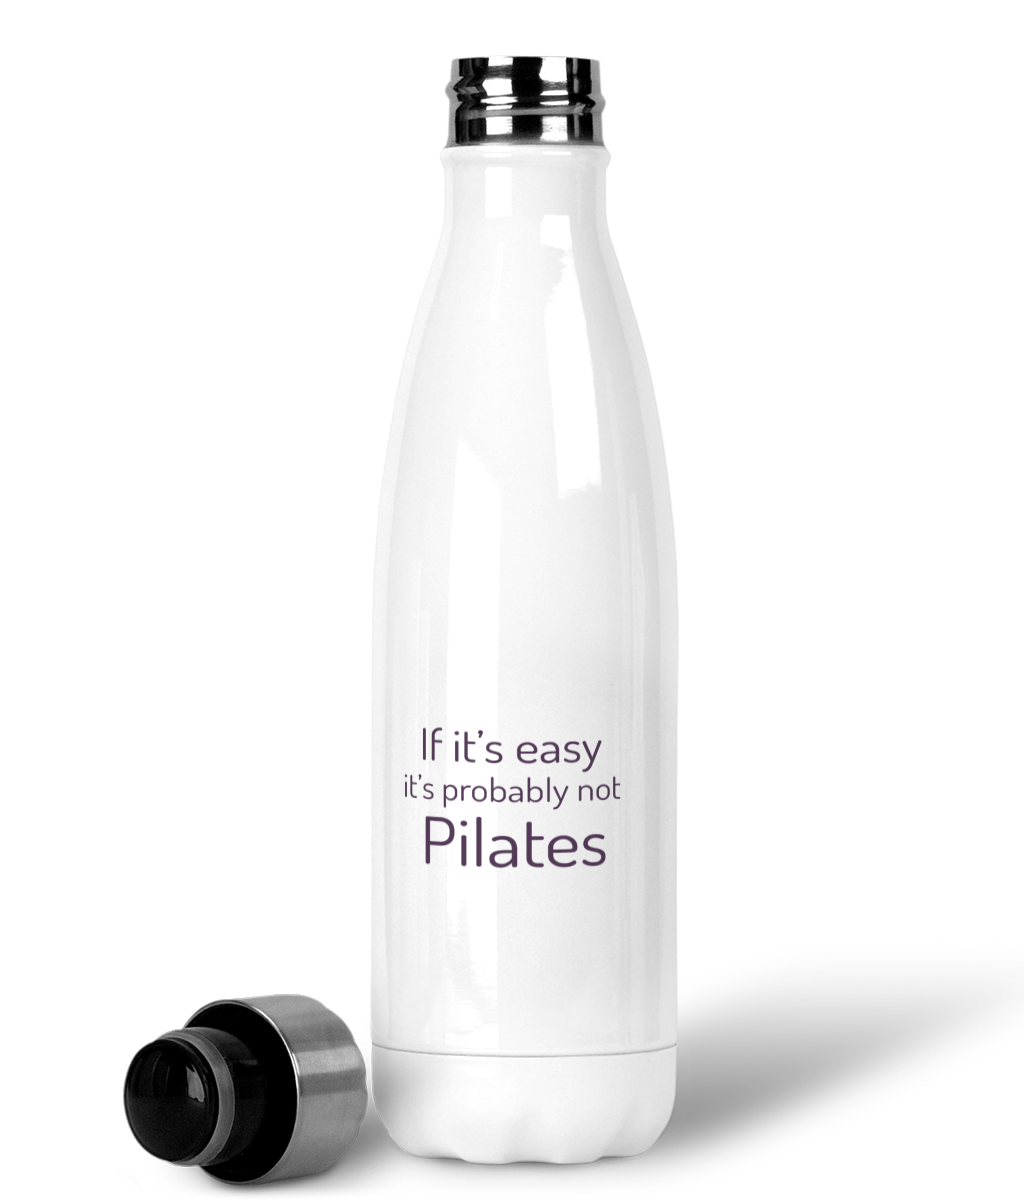 Pilates quote travel bottle